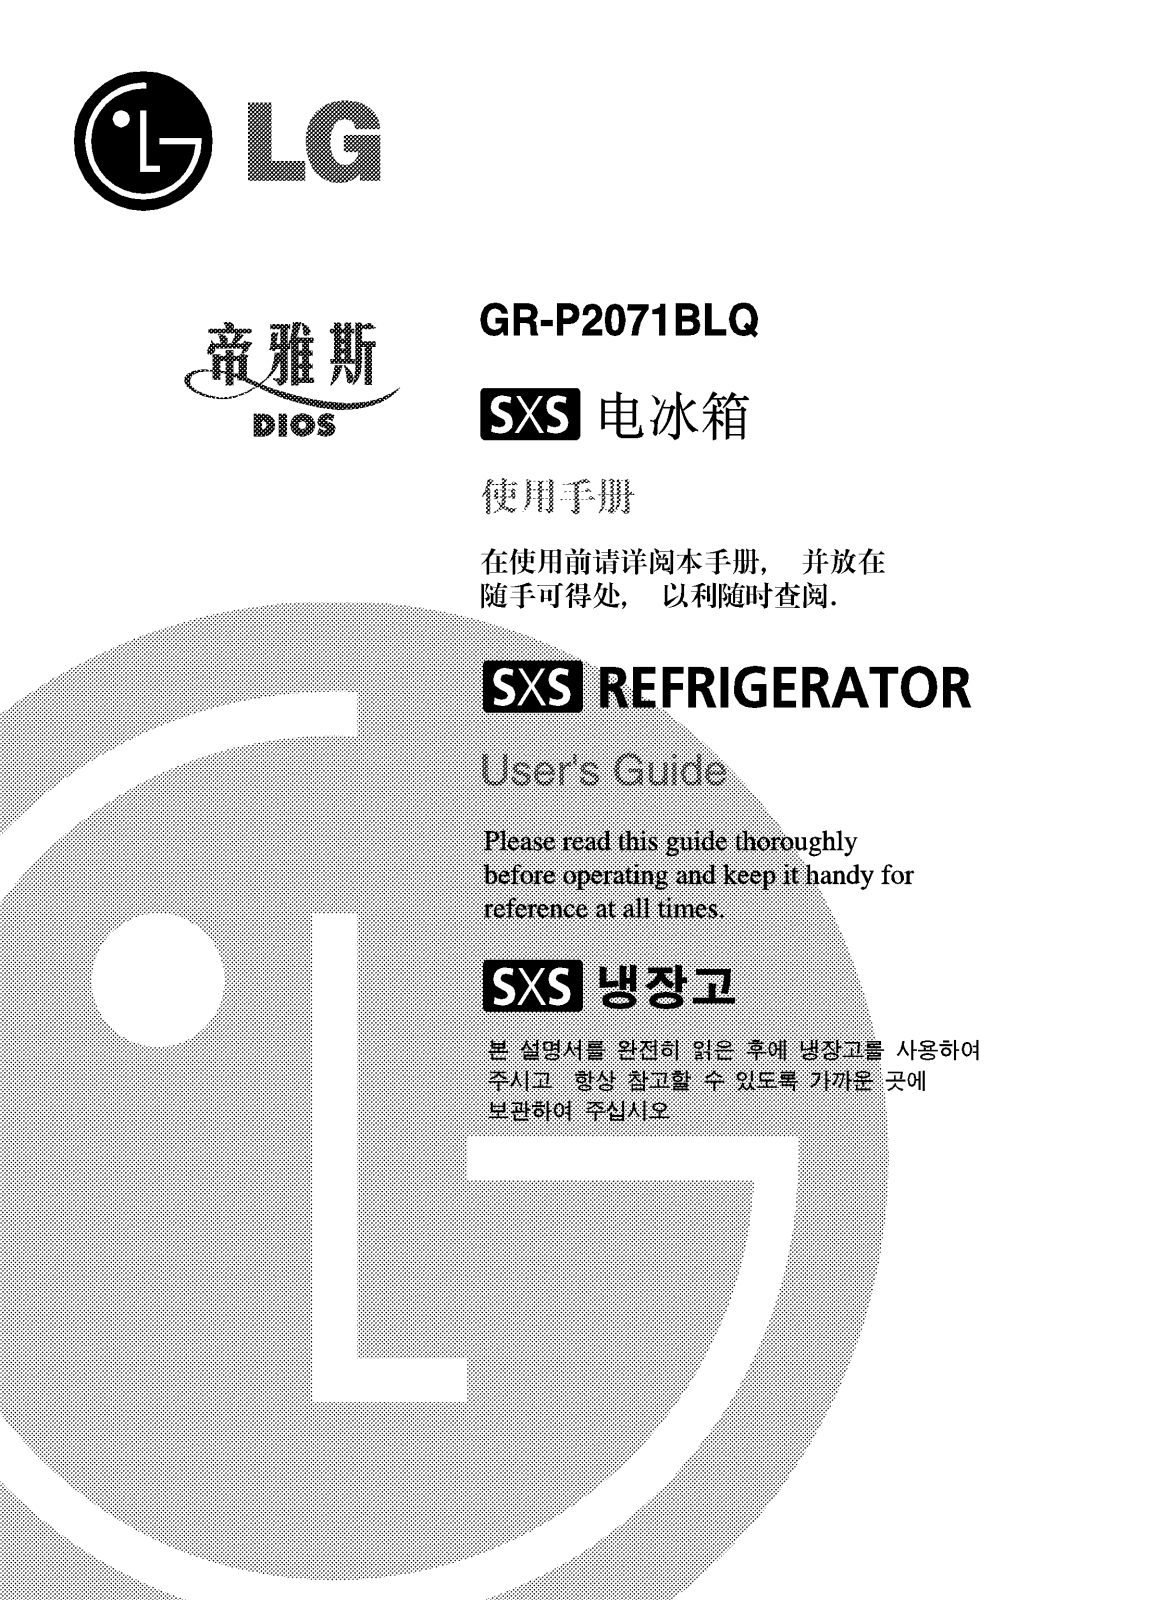 LG GR-P197QLR Product Manual